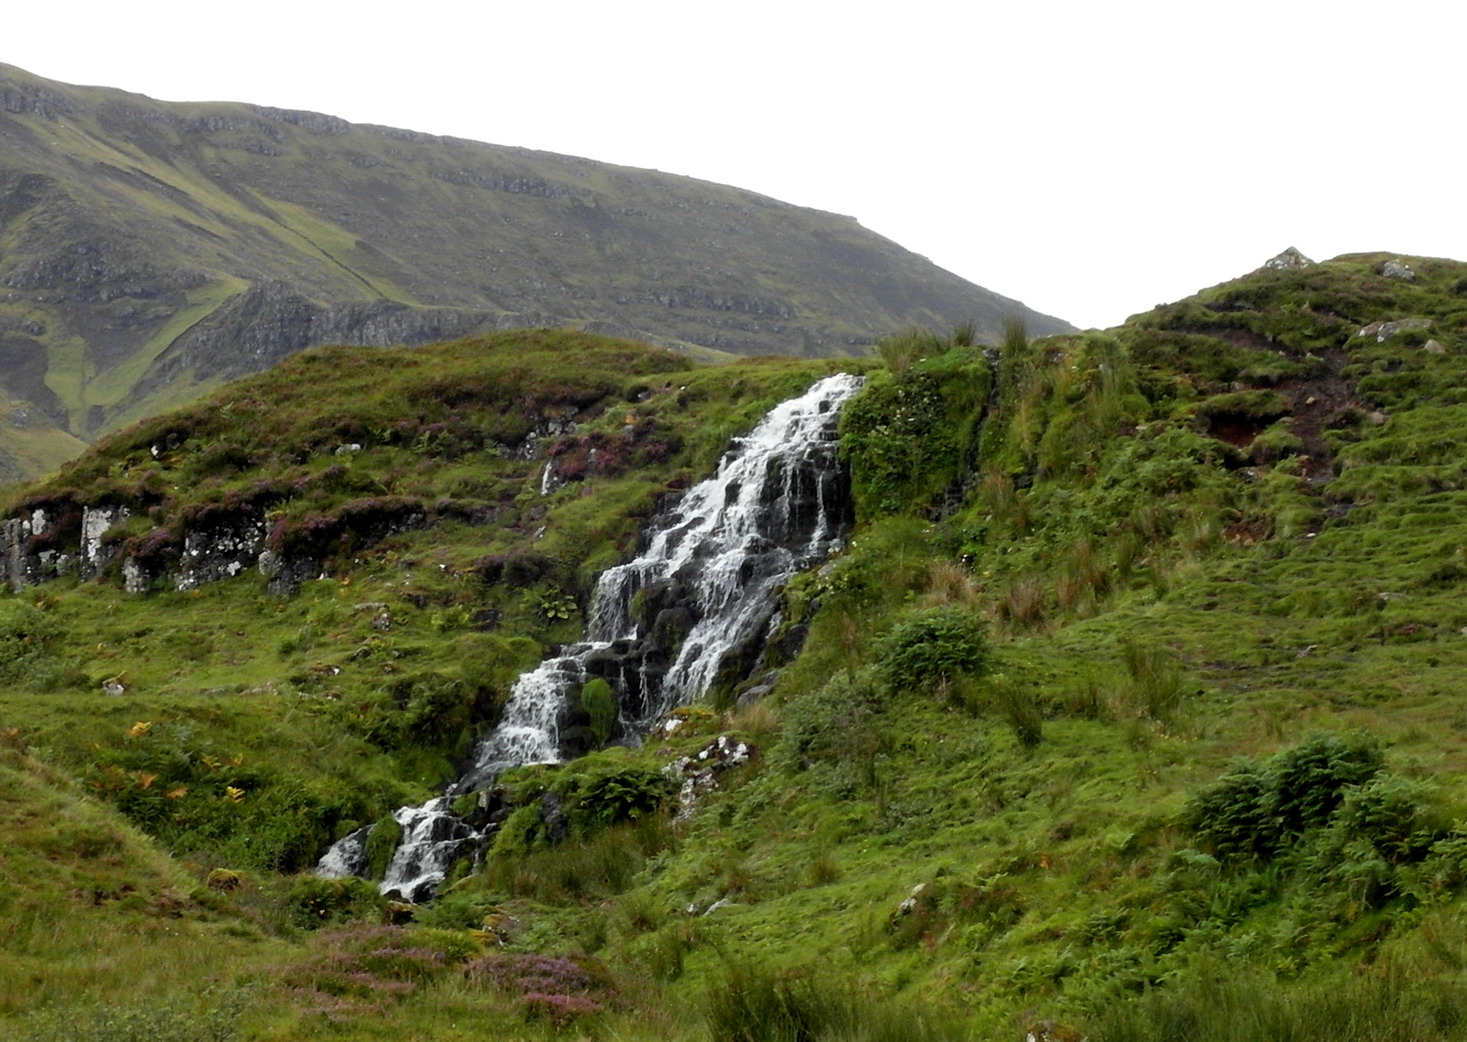 One of very many waterfalls on Skye.